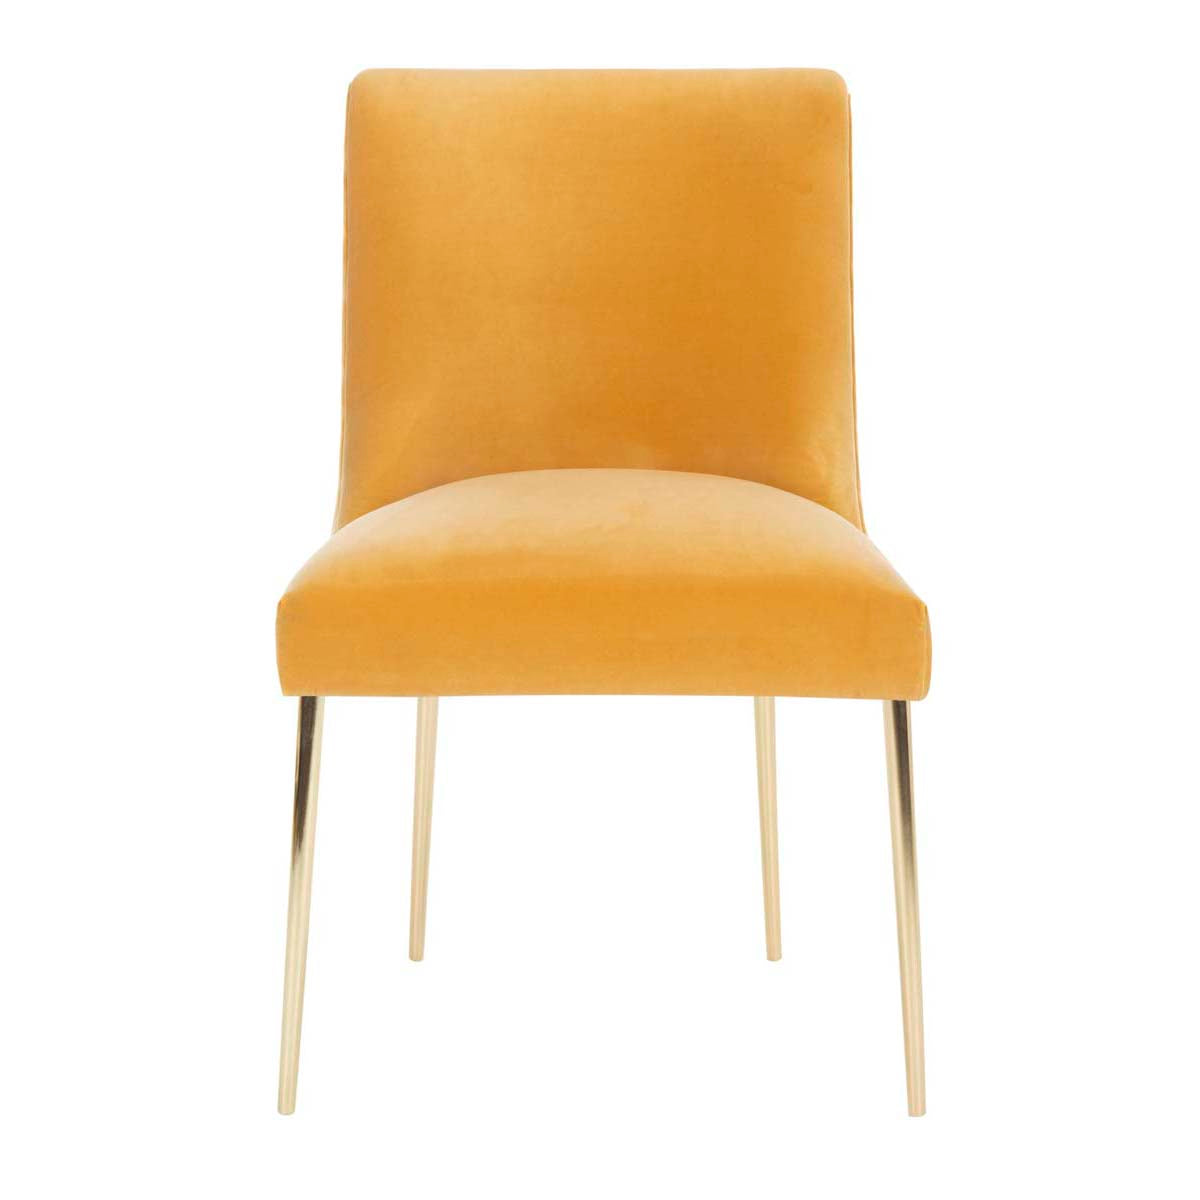 Safavieh Couture Nolita Dining Chair - Mustard